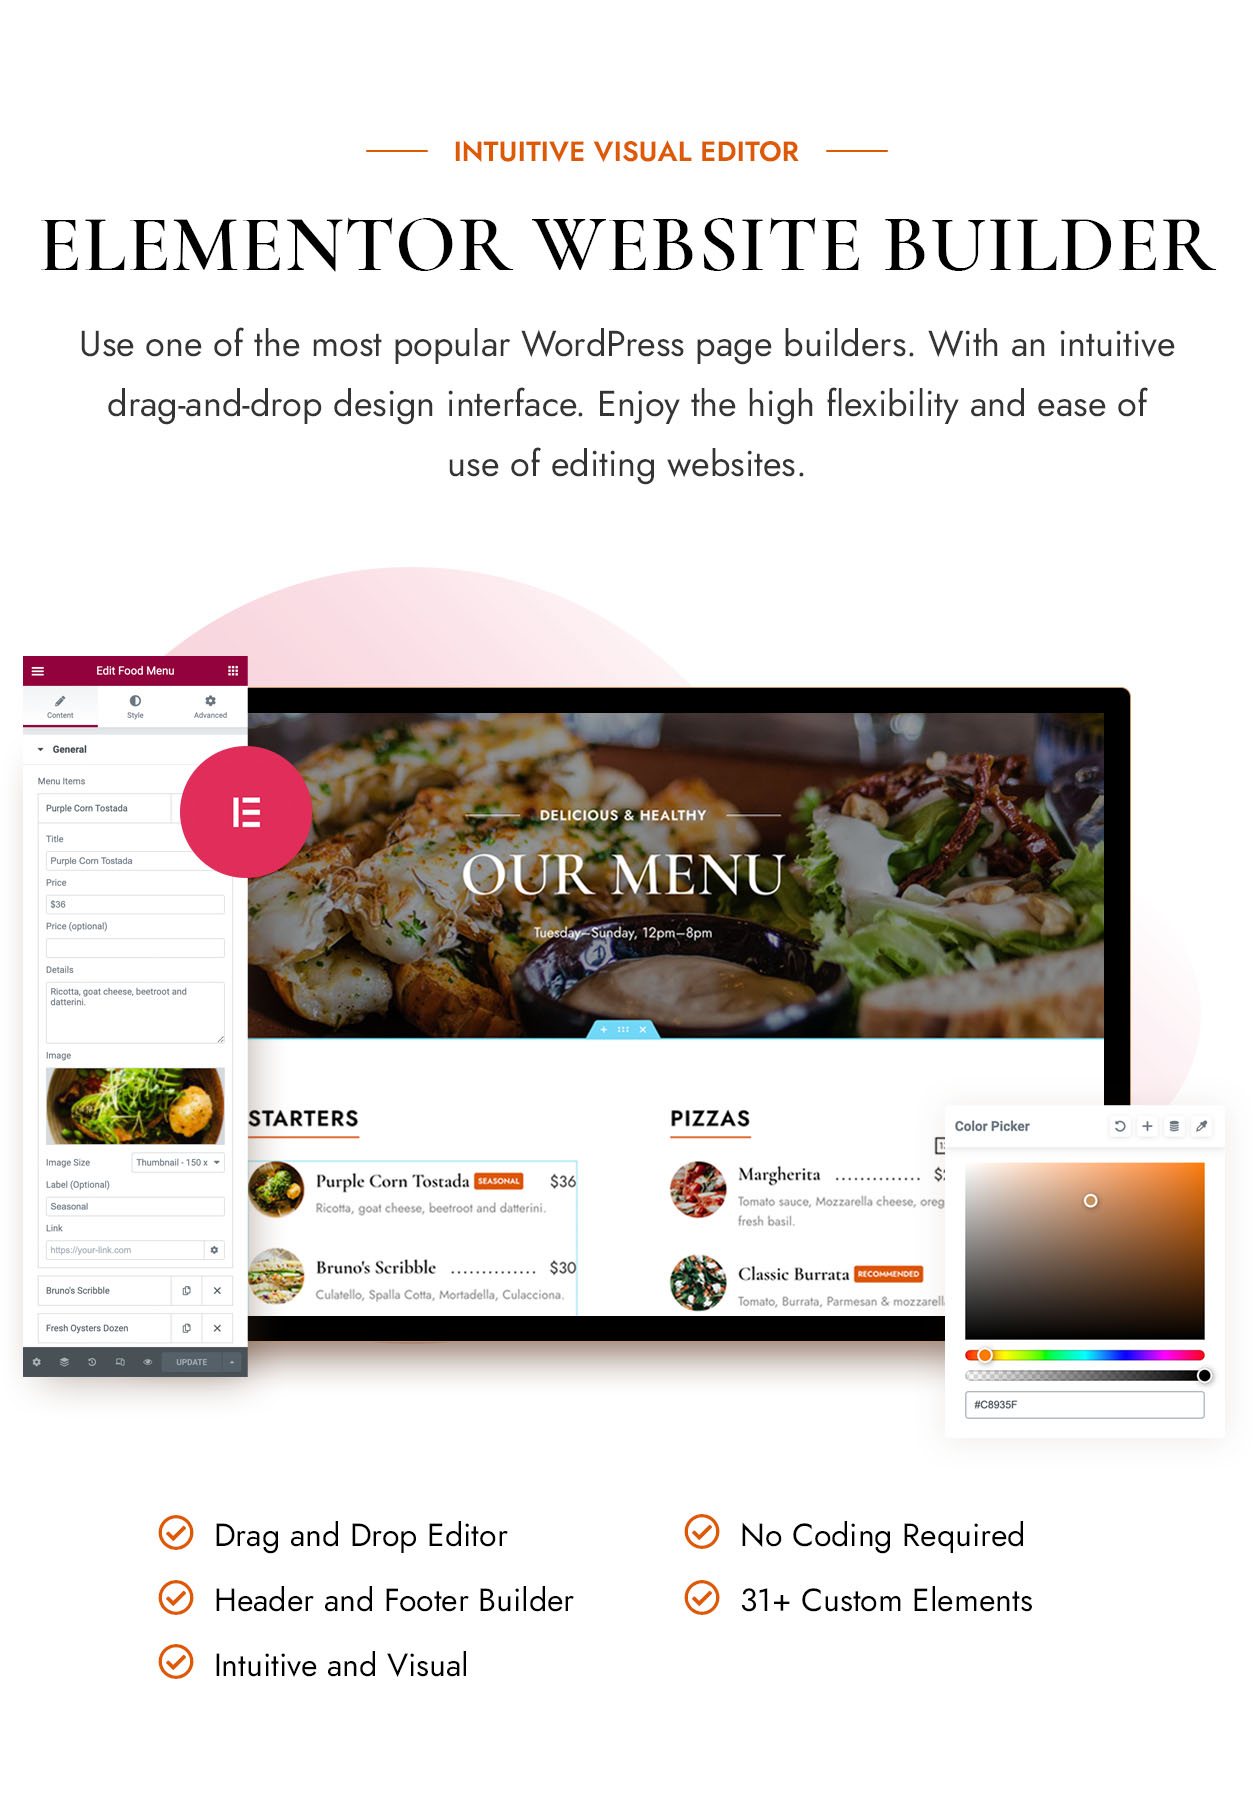 PatioTime - Restaurant WordPress Theme.